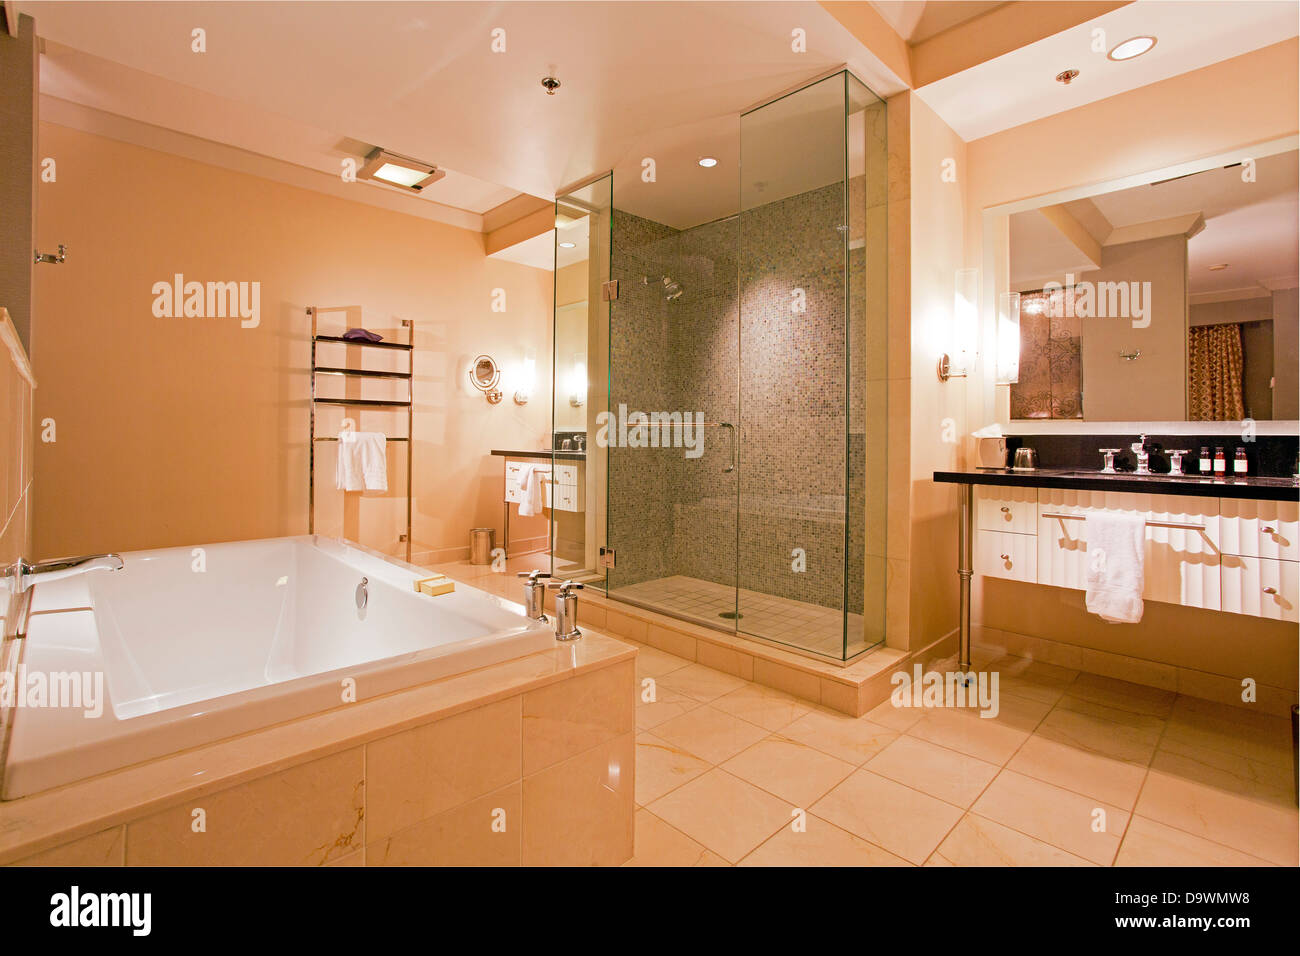 Cosmopolitan of Las Vegas luxury resort casino and hotel Stock Photo